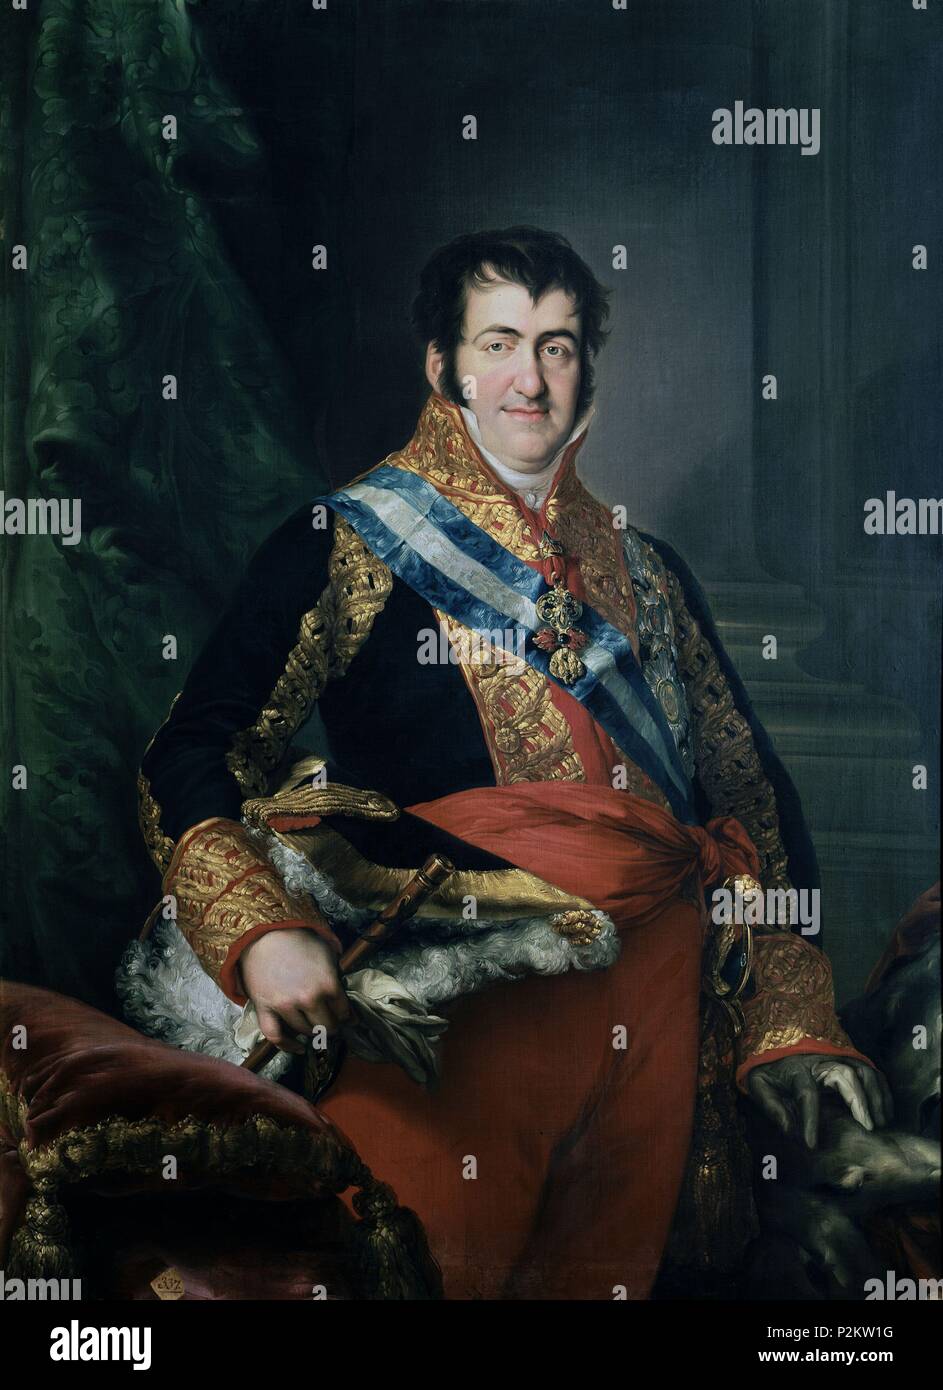 Ferdinand VII (1784-1833) - 19th century - 142x106 cm - oil on canvas. Author: Luis López Piquer (1802-1865). Location: ACADEMIA DE SAN FERNANDO-PINTURA, MADRID, SPAIN. Also known as: FERNANDO VII; FERNANDO VII 1784/1833, REY DE ESPAÑA. Stock Photo